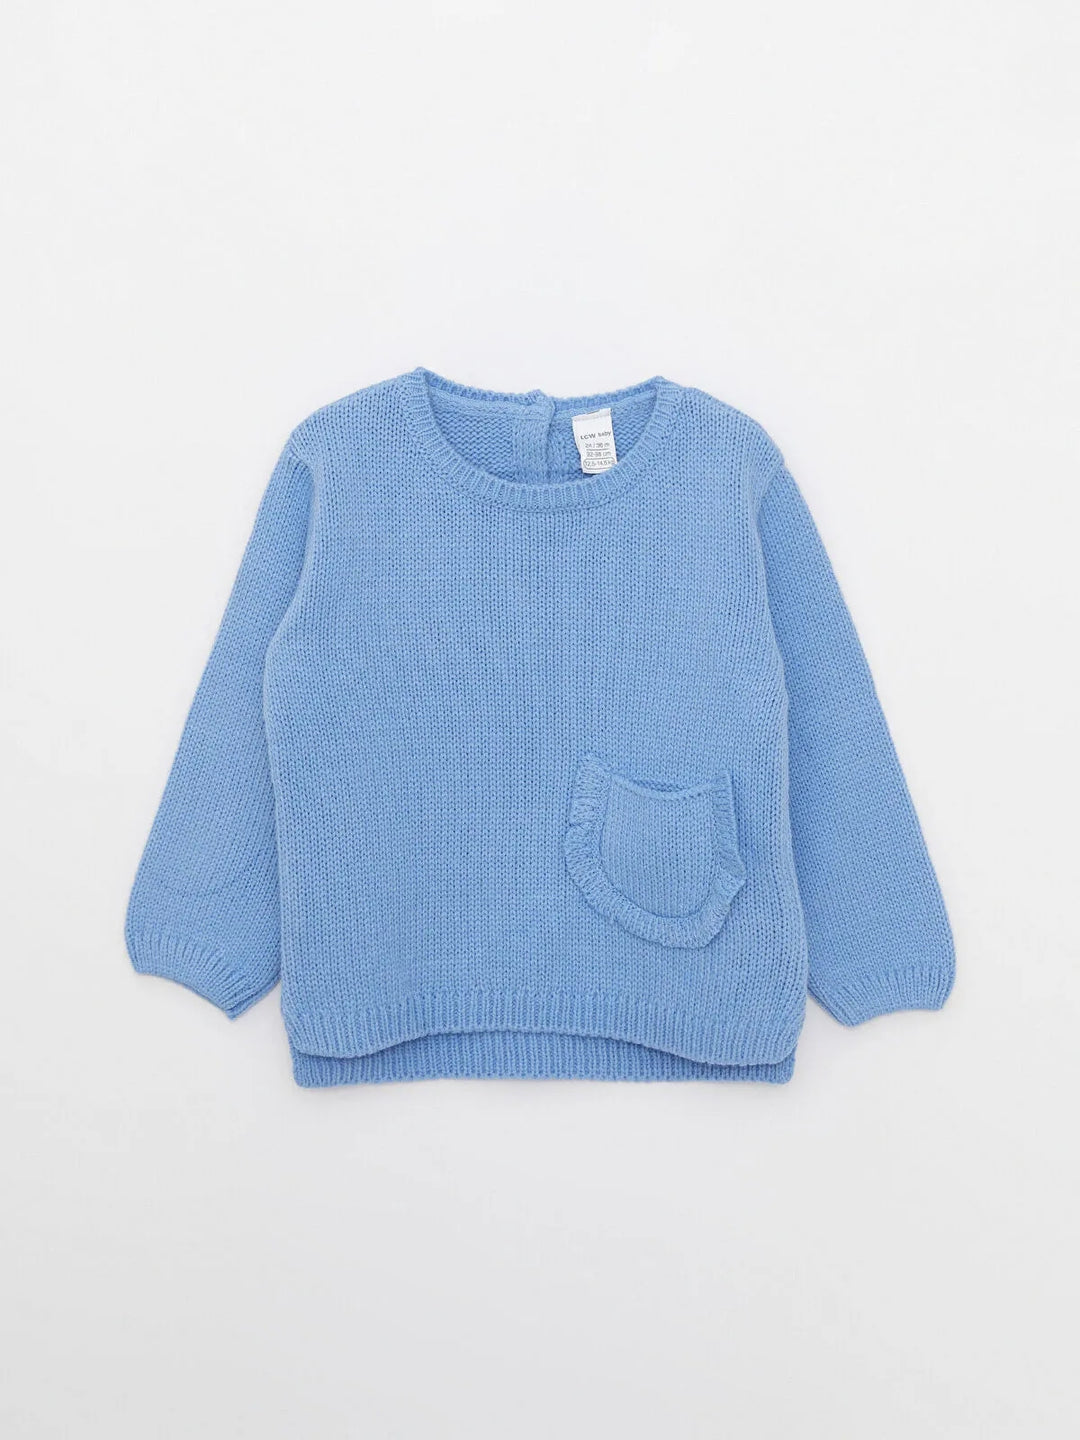 Crew Neck Long Sleeve Basic Baby Girls Knitwear Sweater